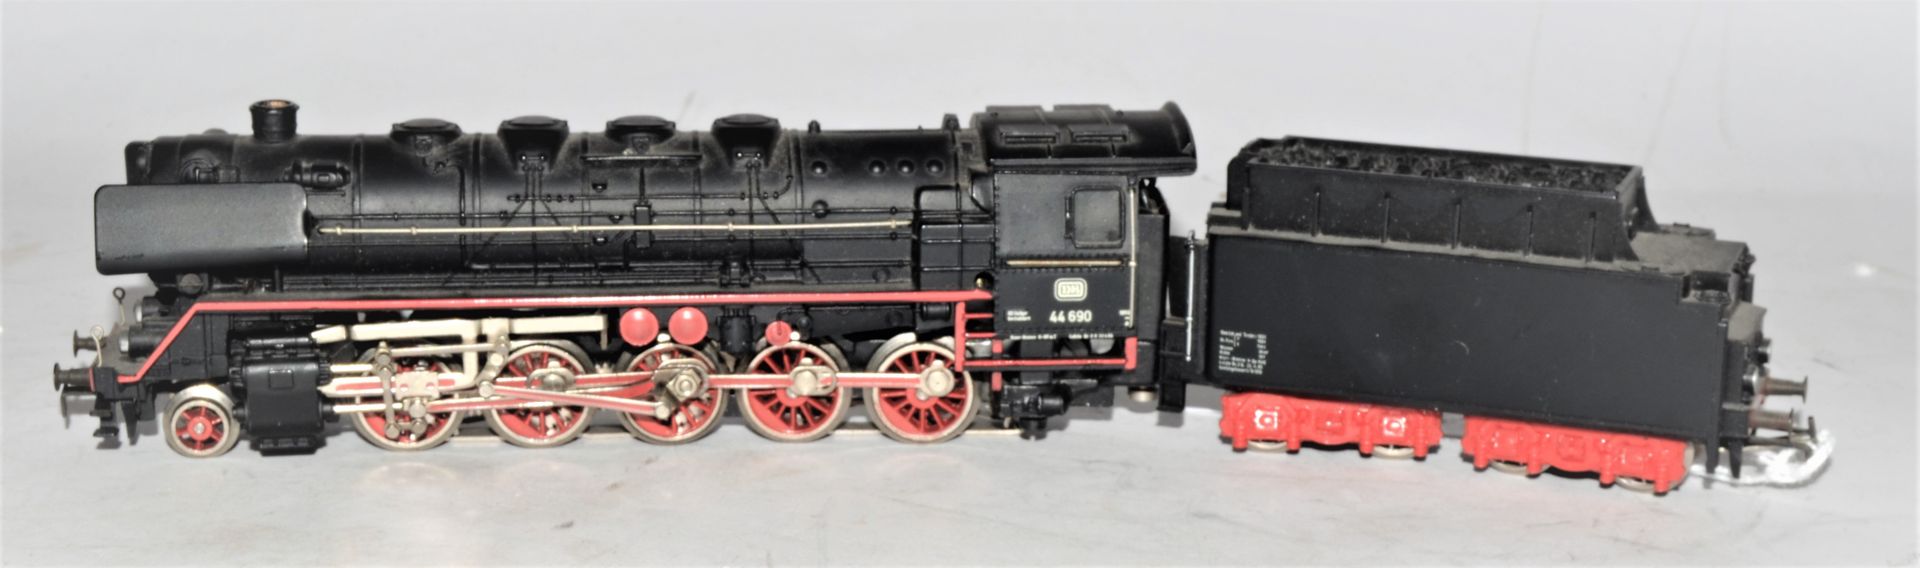 MÄRKLIN Ref 3047蒸汽机车150，4轴招标，DB 44型黑色，编号44 690，28 